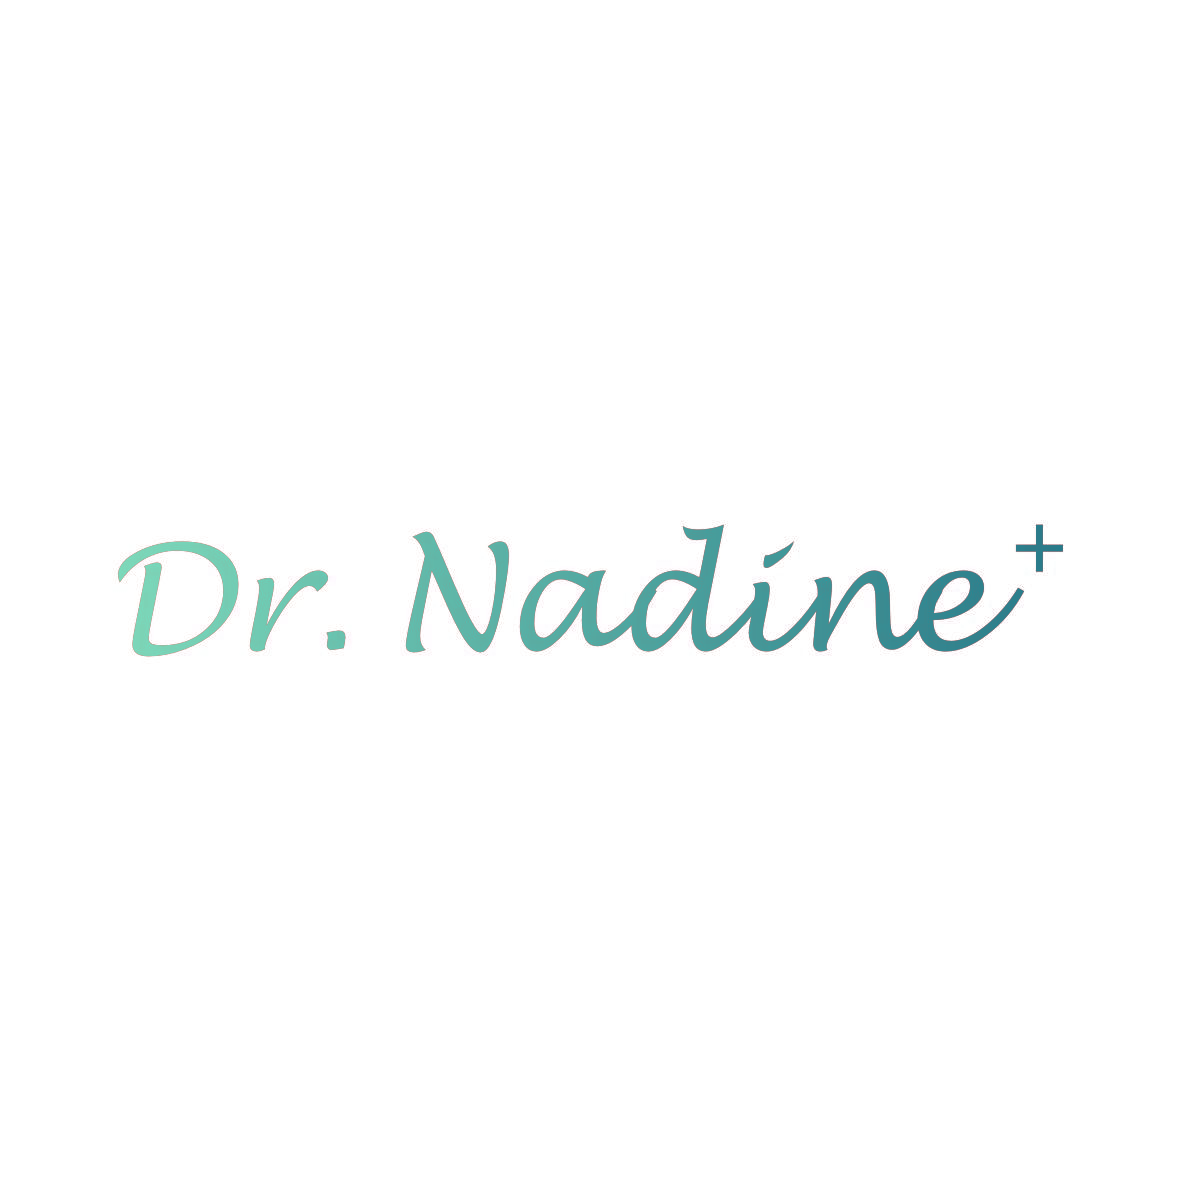 DR. NADINE+